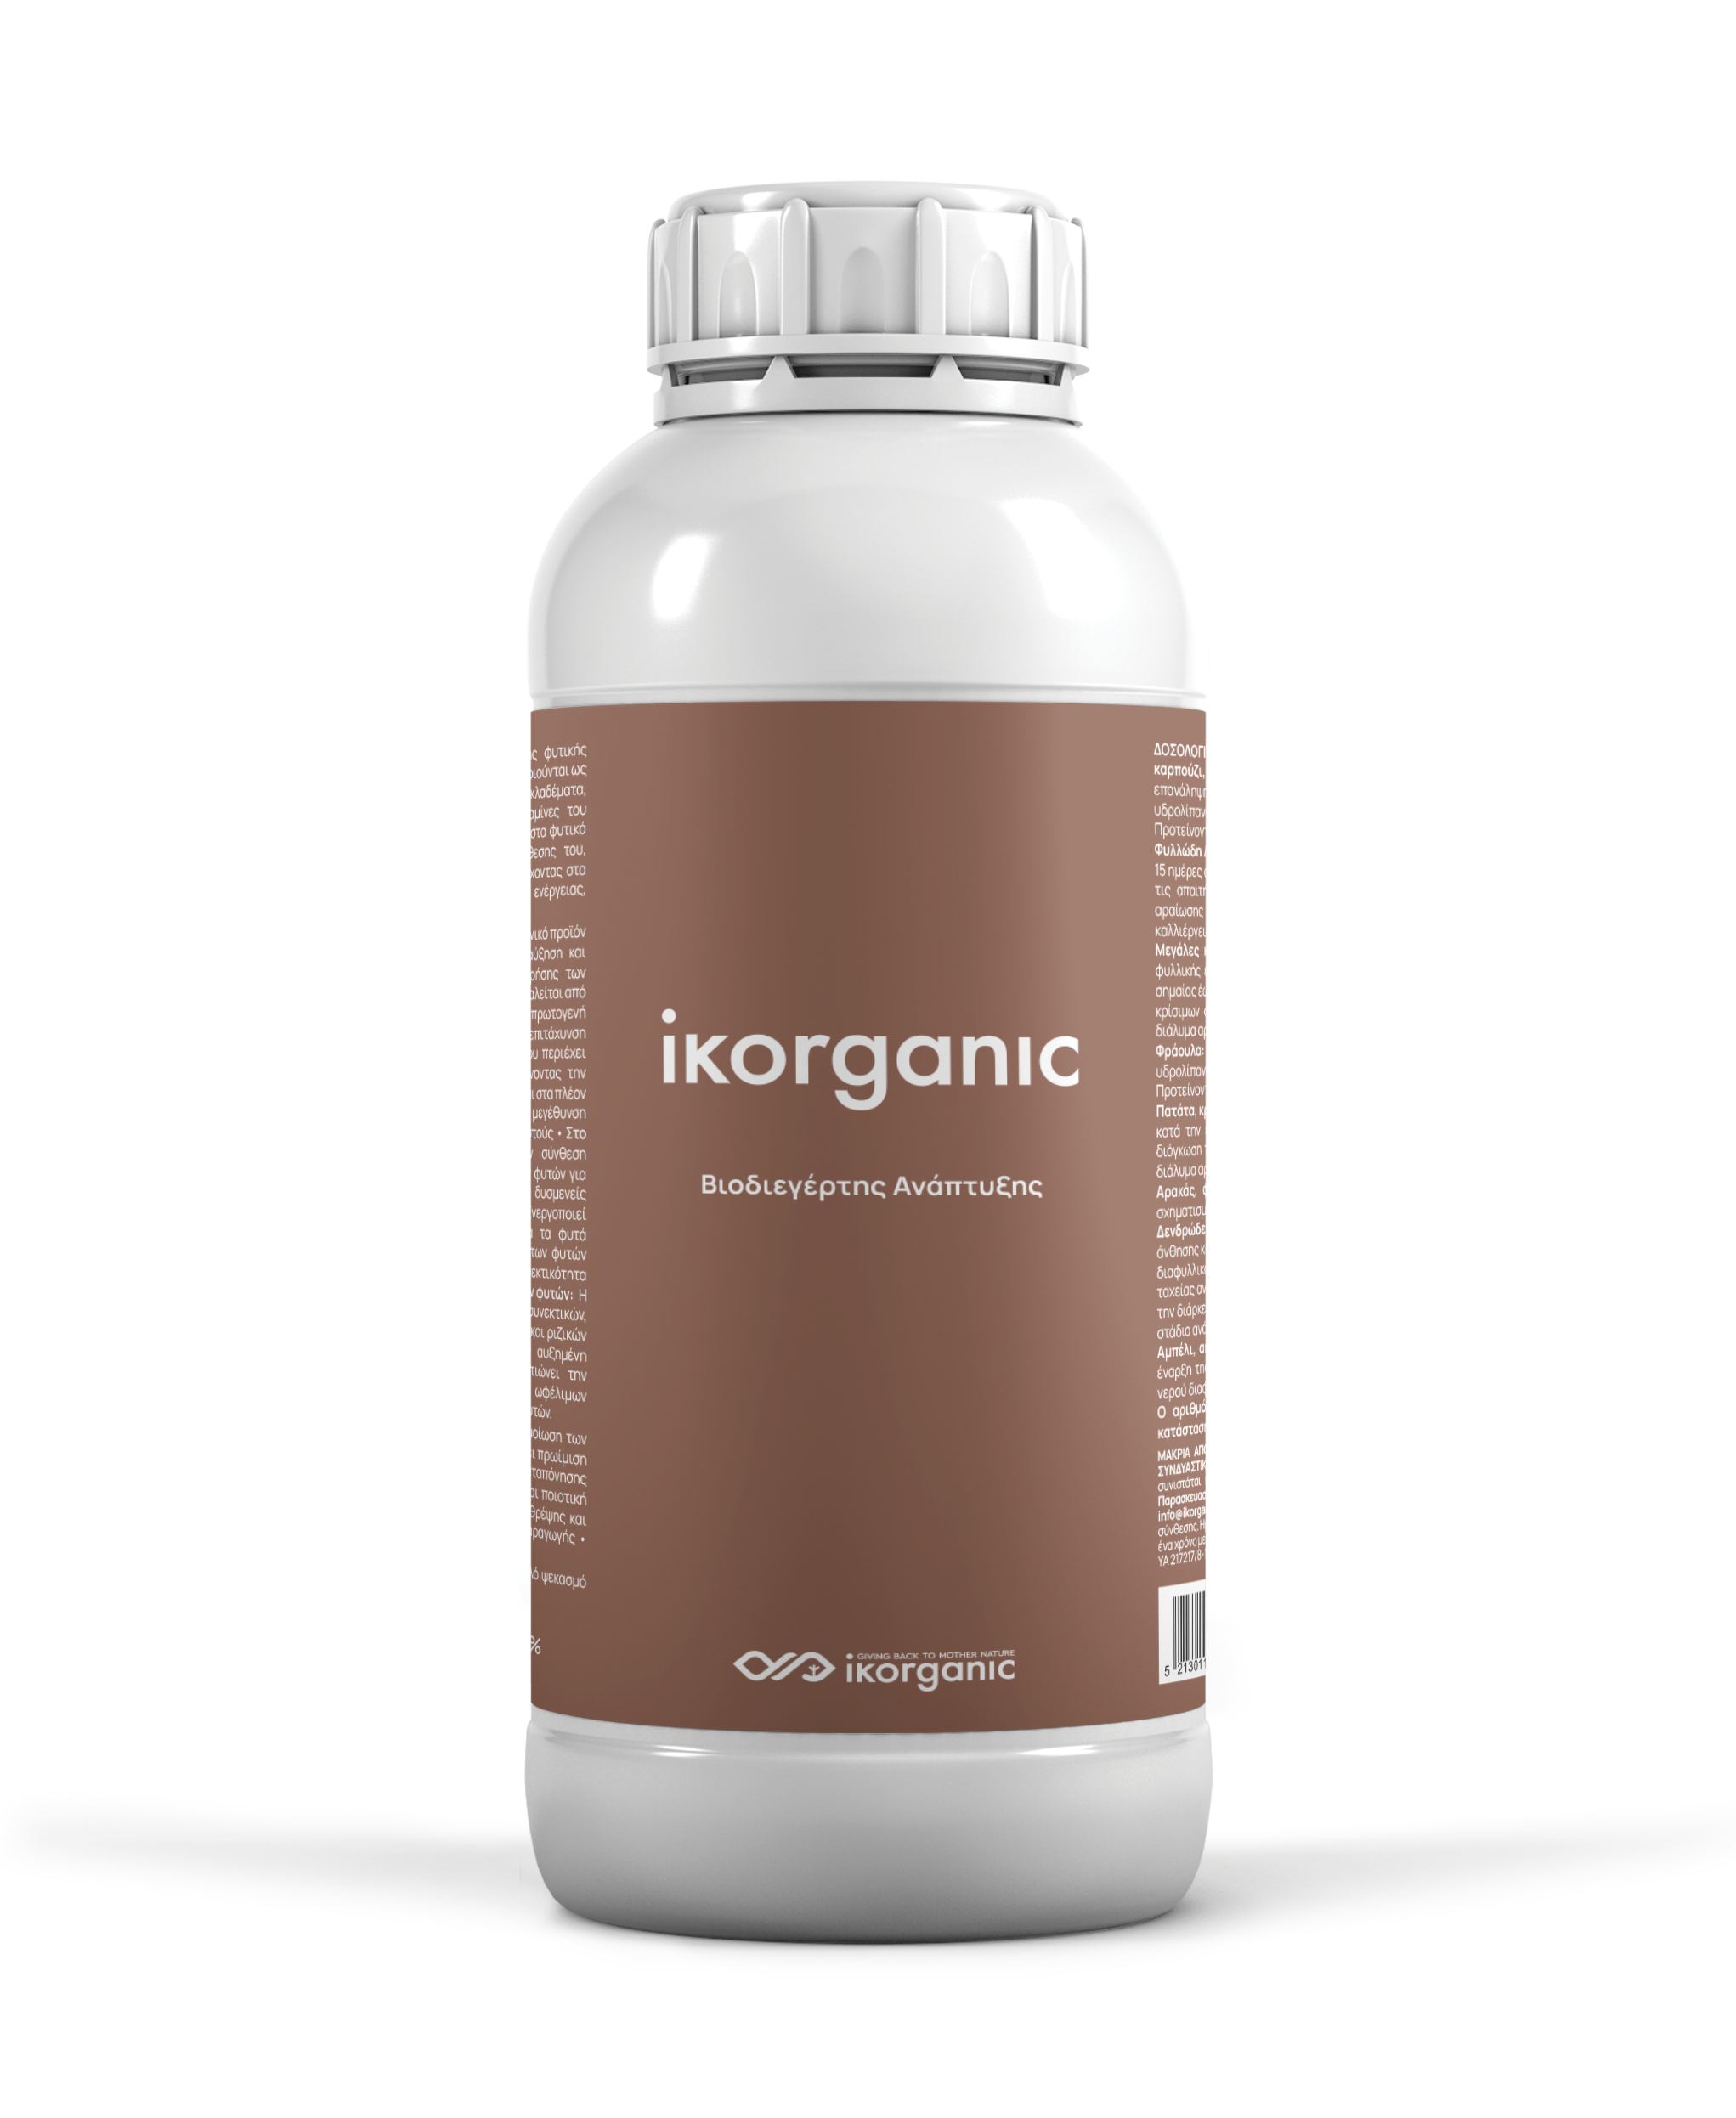 Ikorganic